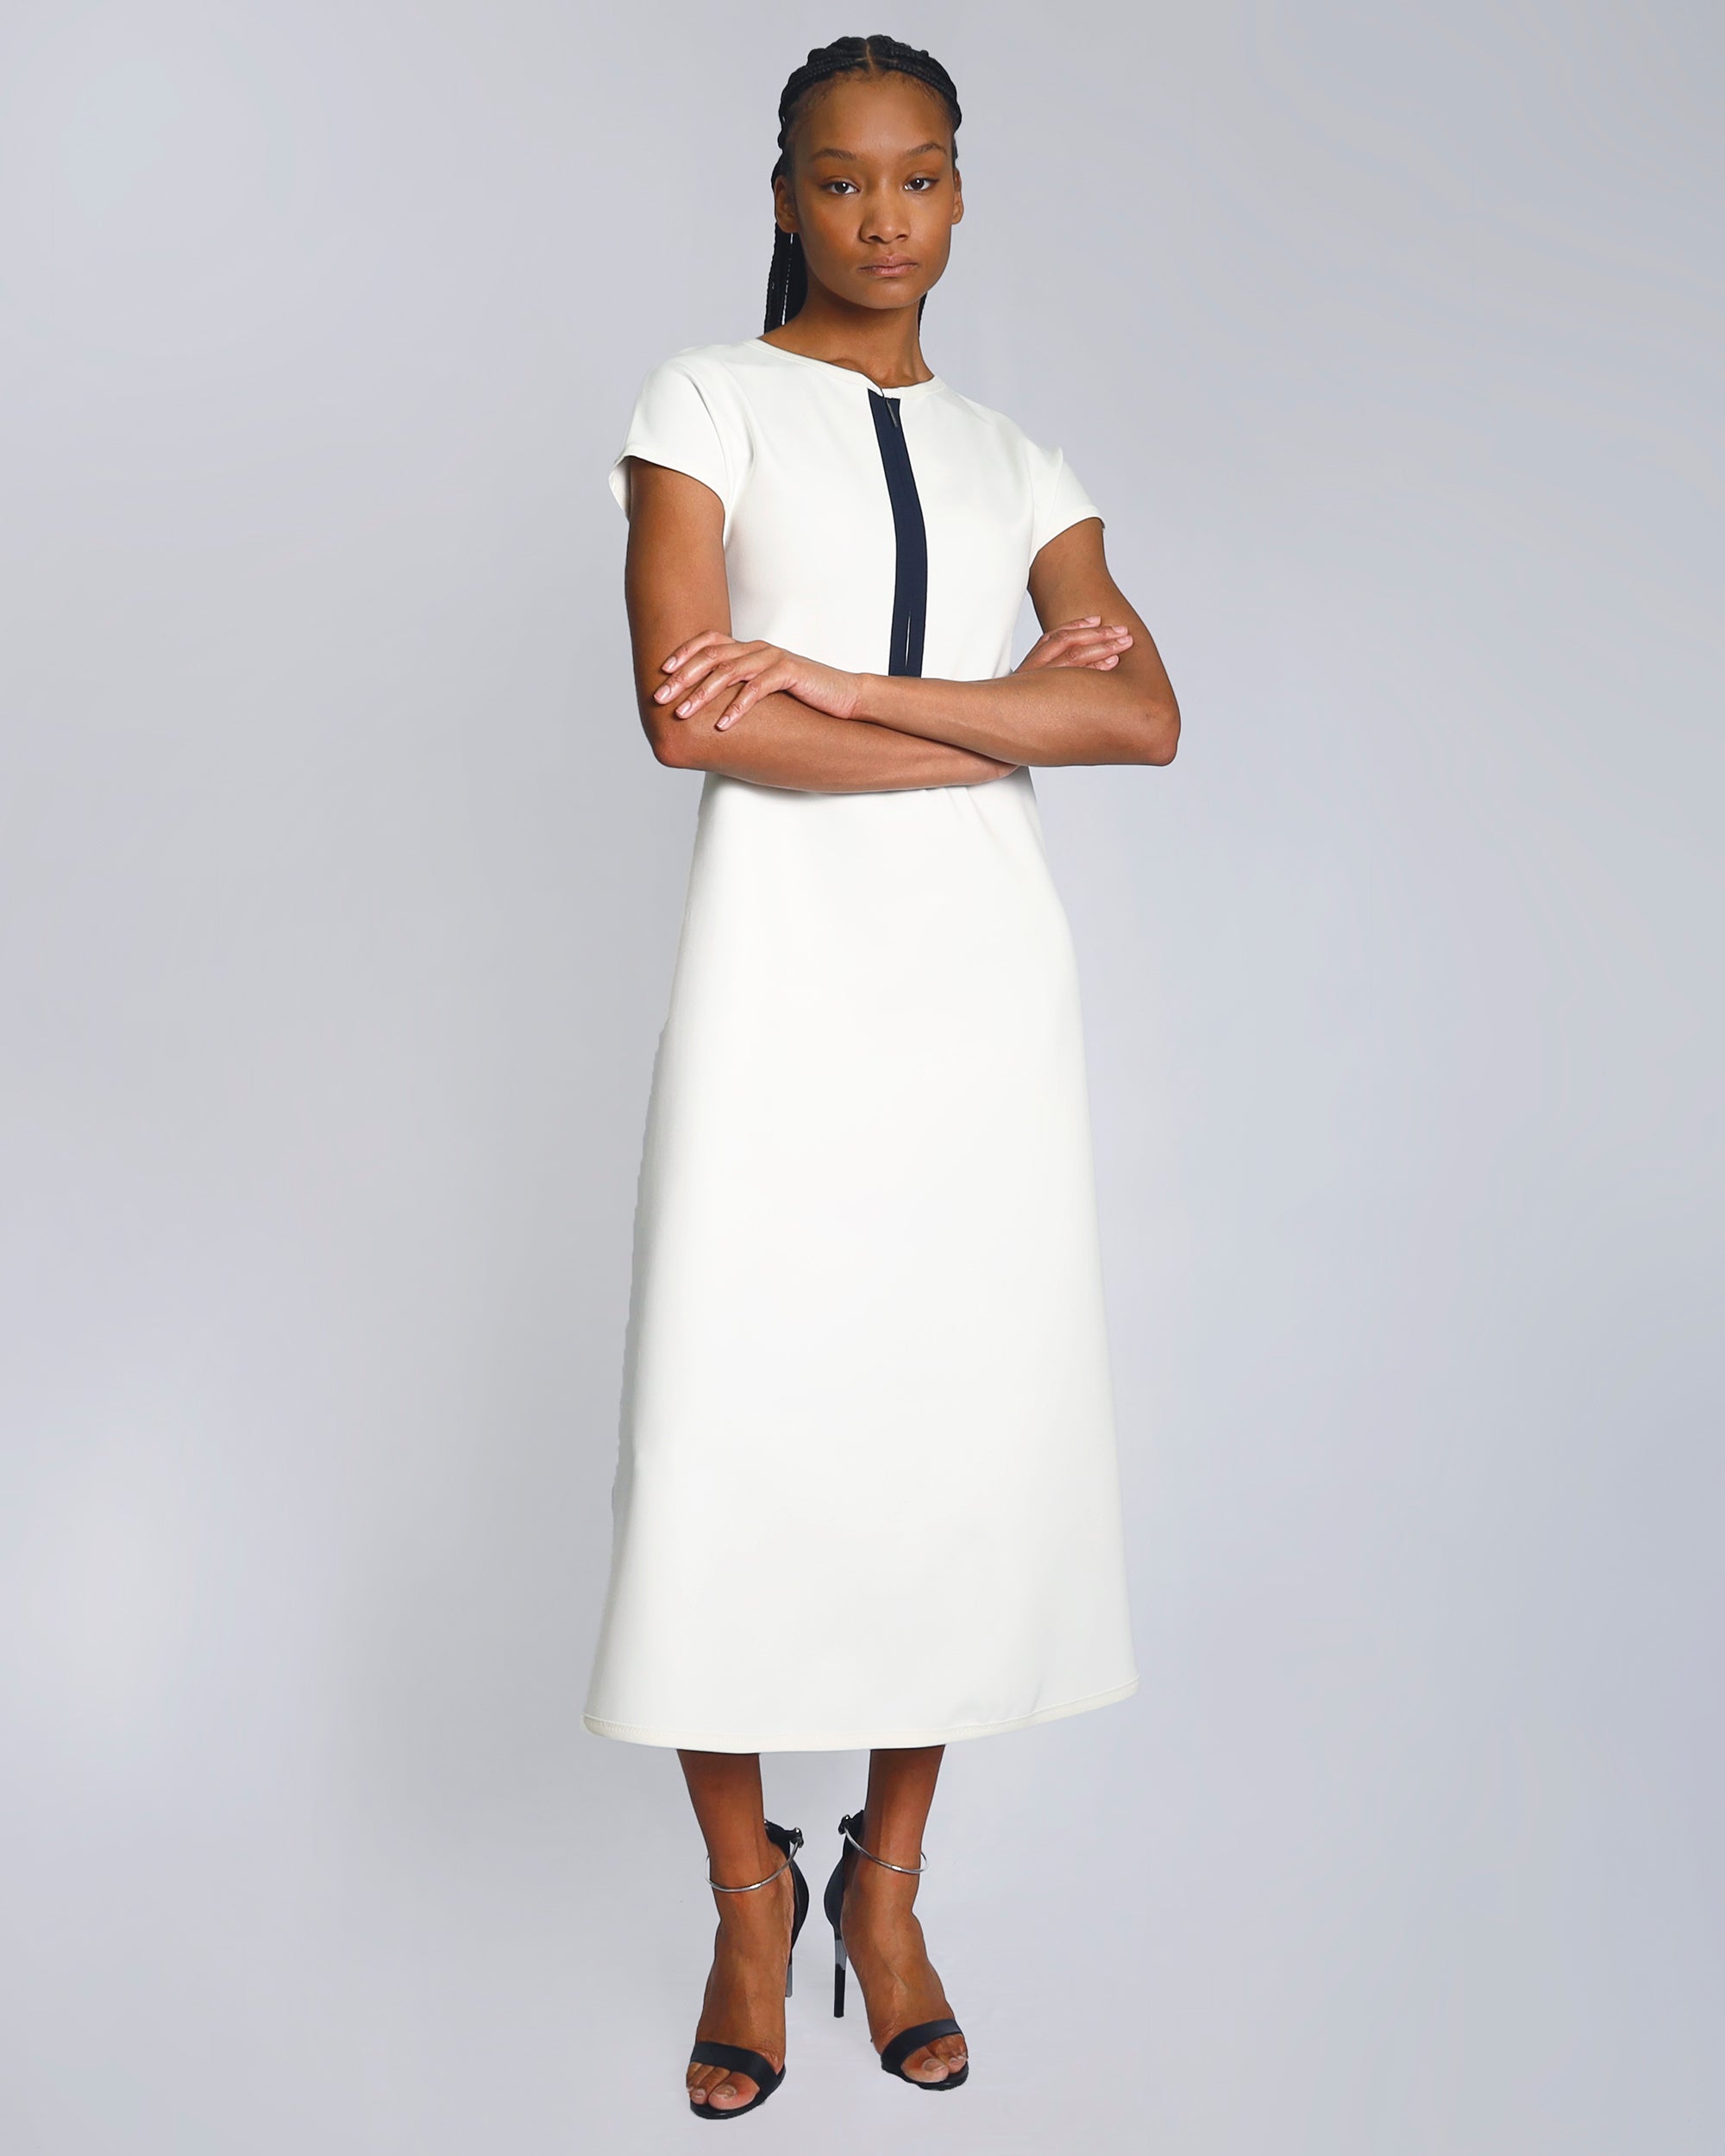 Maison Marie Saint Pierre | Dress | ERLAN | White | Navy